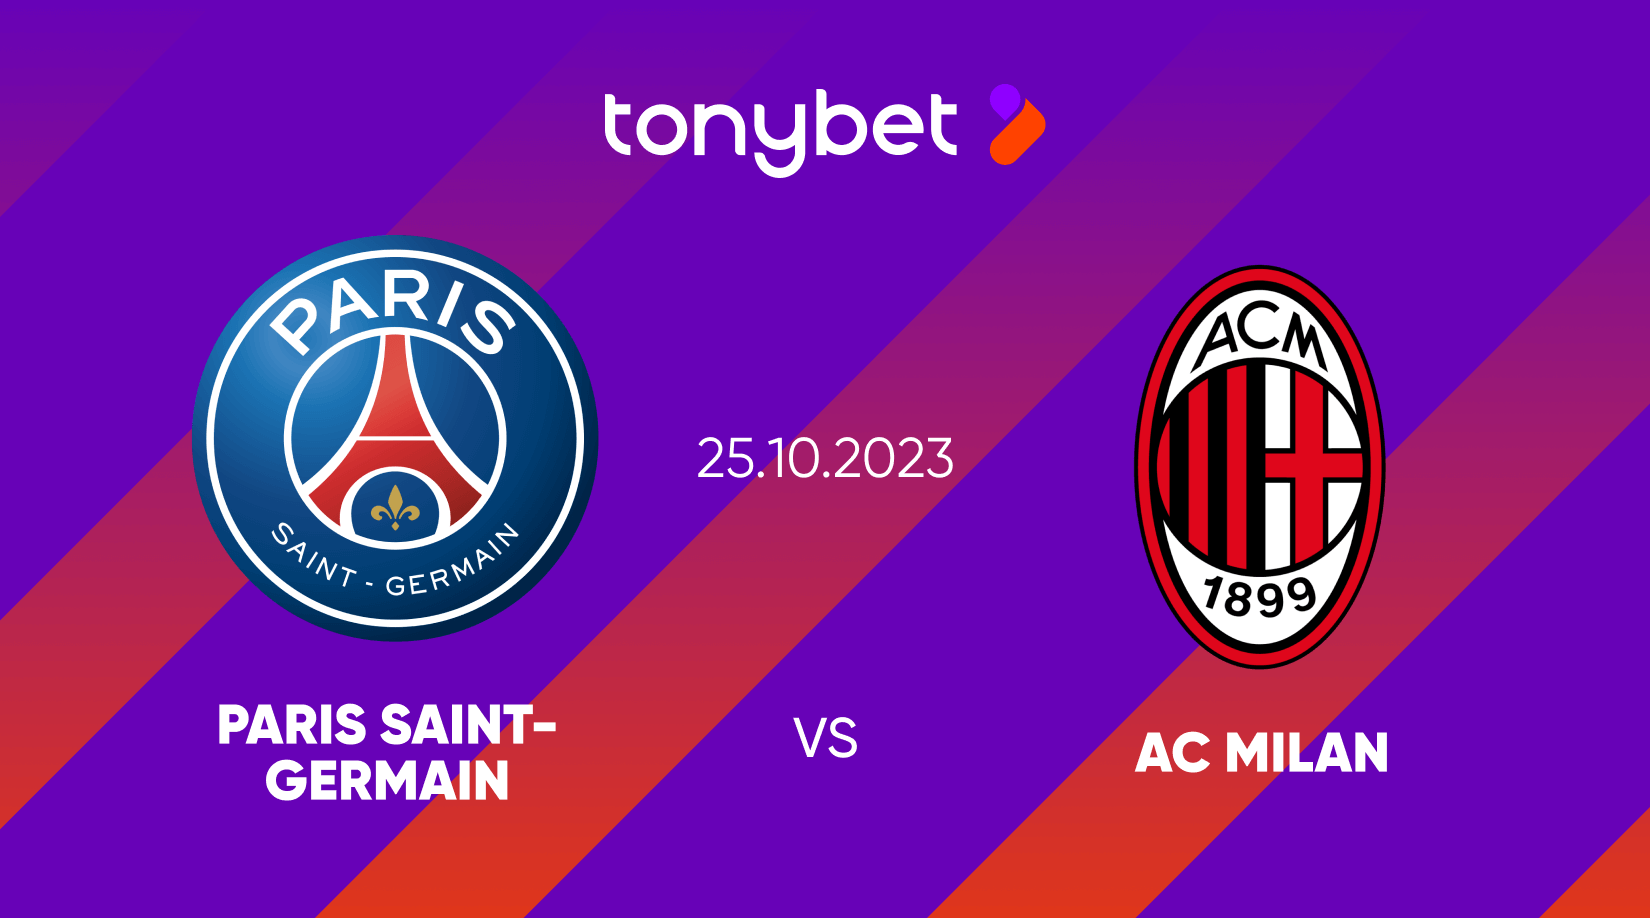 Paris Saint-Germain vs AC Milan Match Preview and Predictions